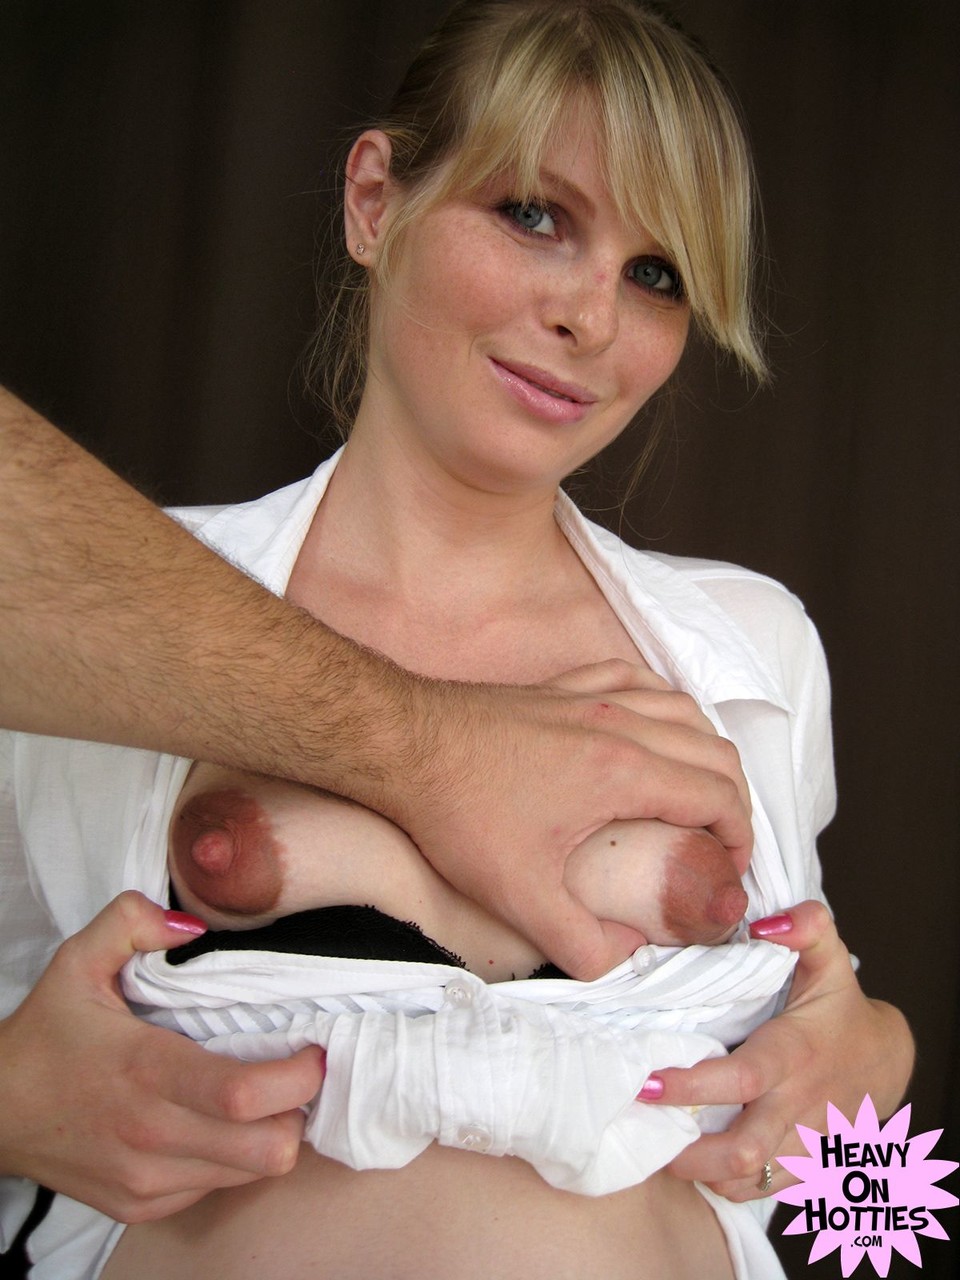 Sweet pregnant Ukrainian Wiska milks her big tits and gives a blowjob photo porno #428635793